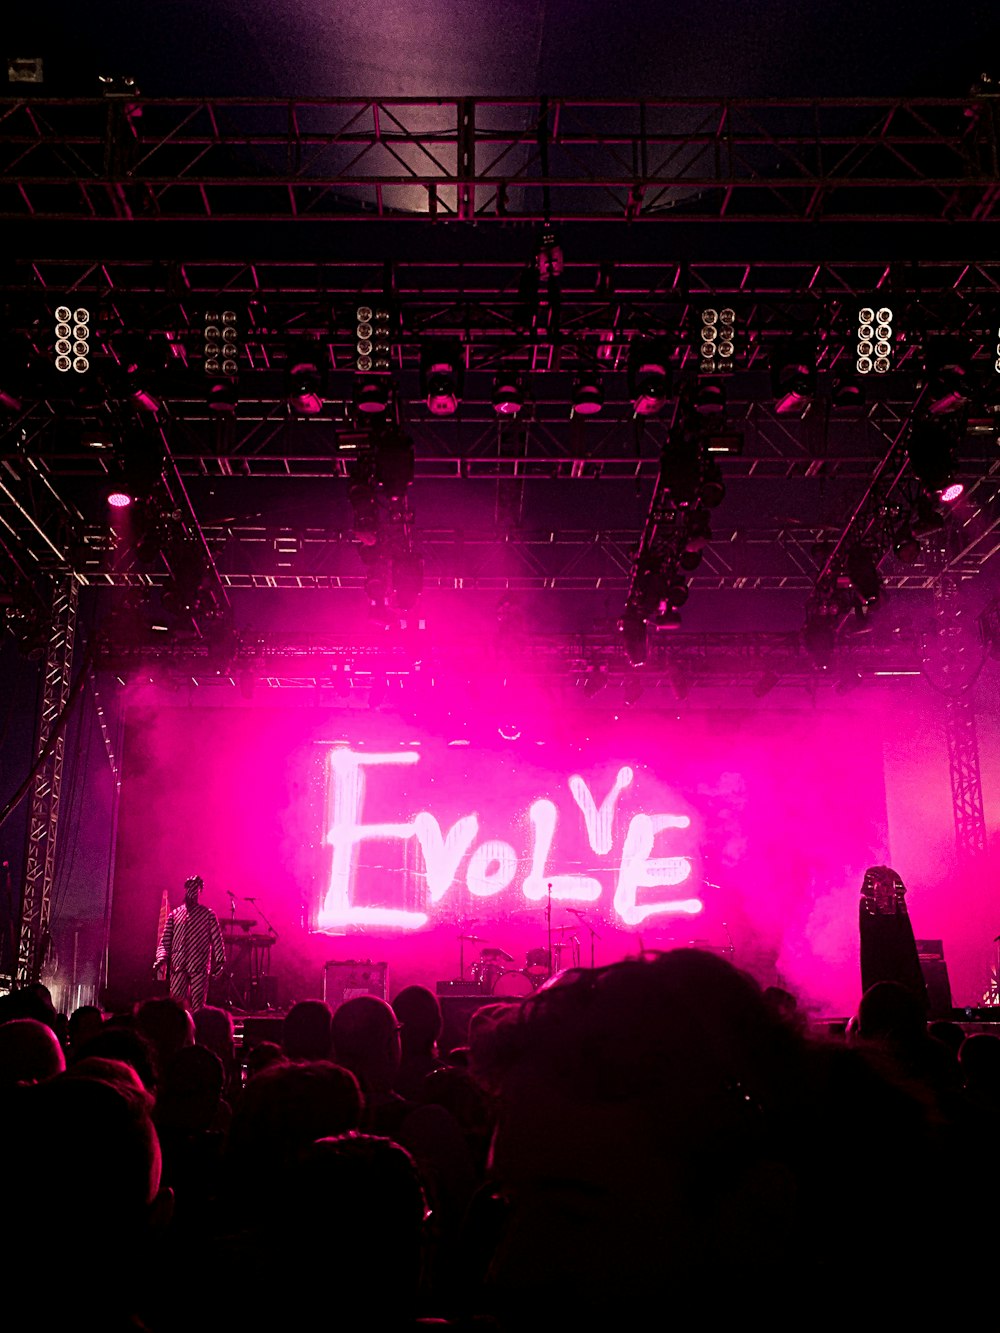 pink Evolve stage neon signage